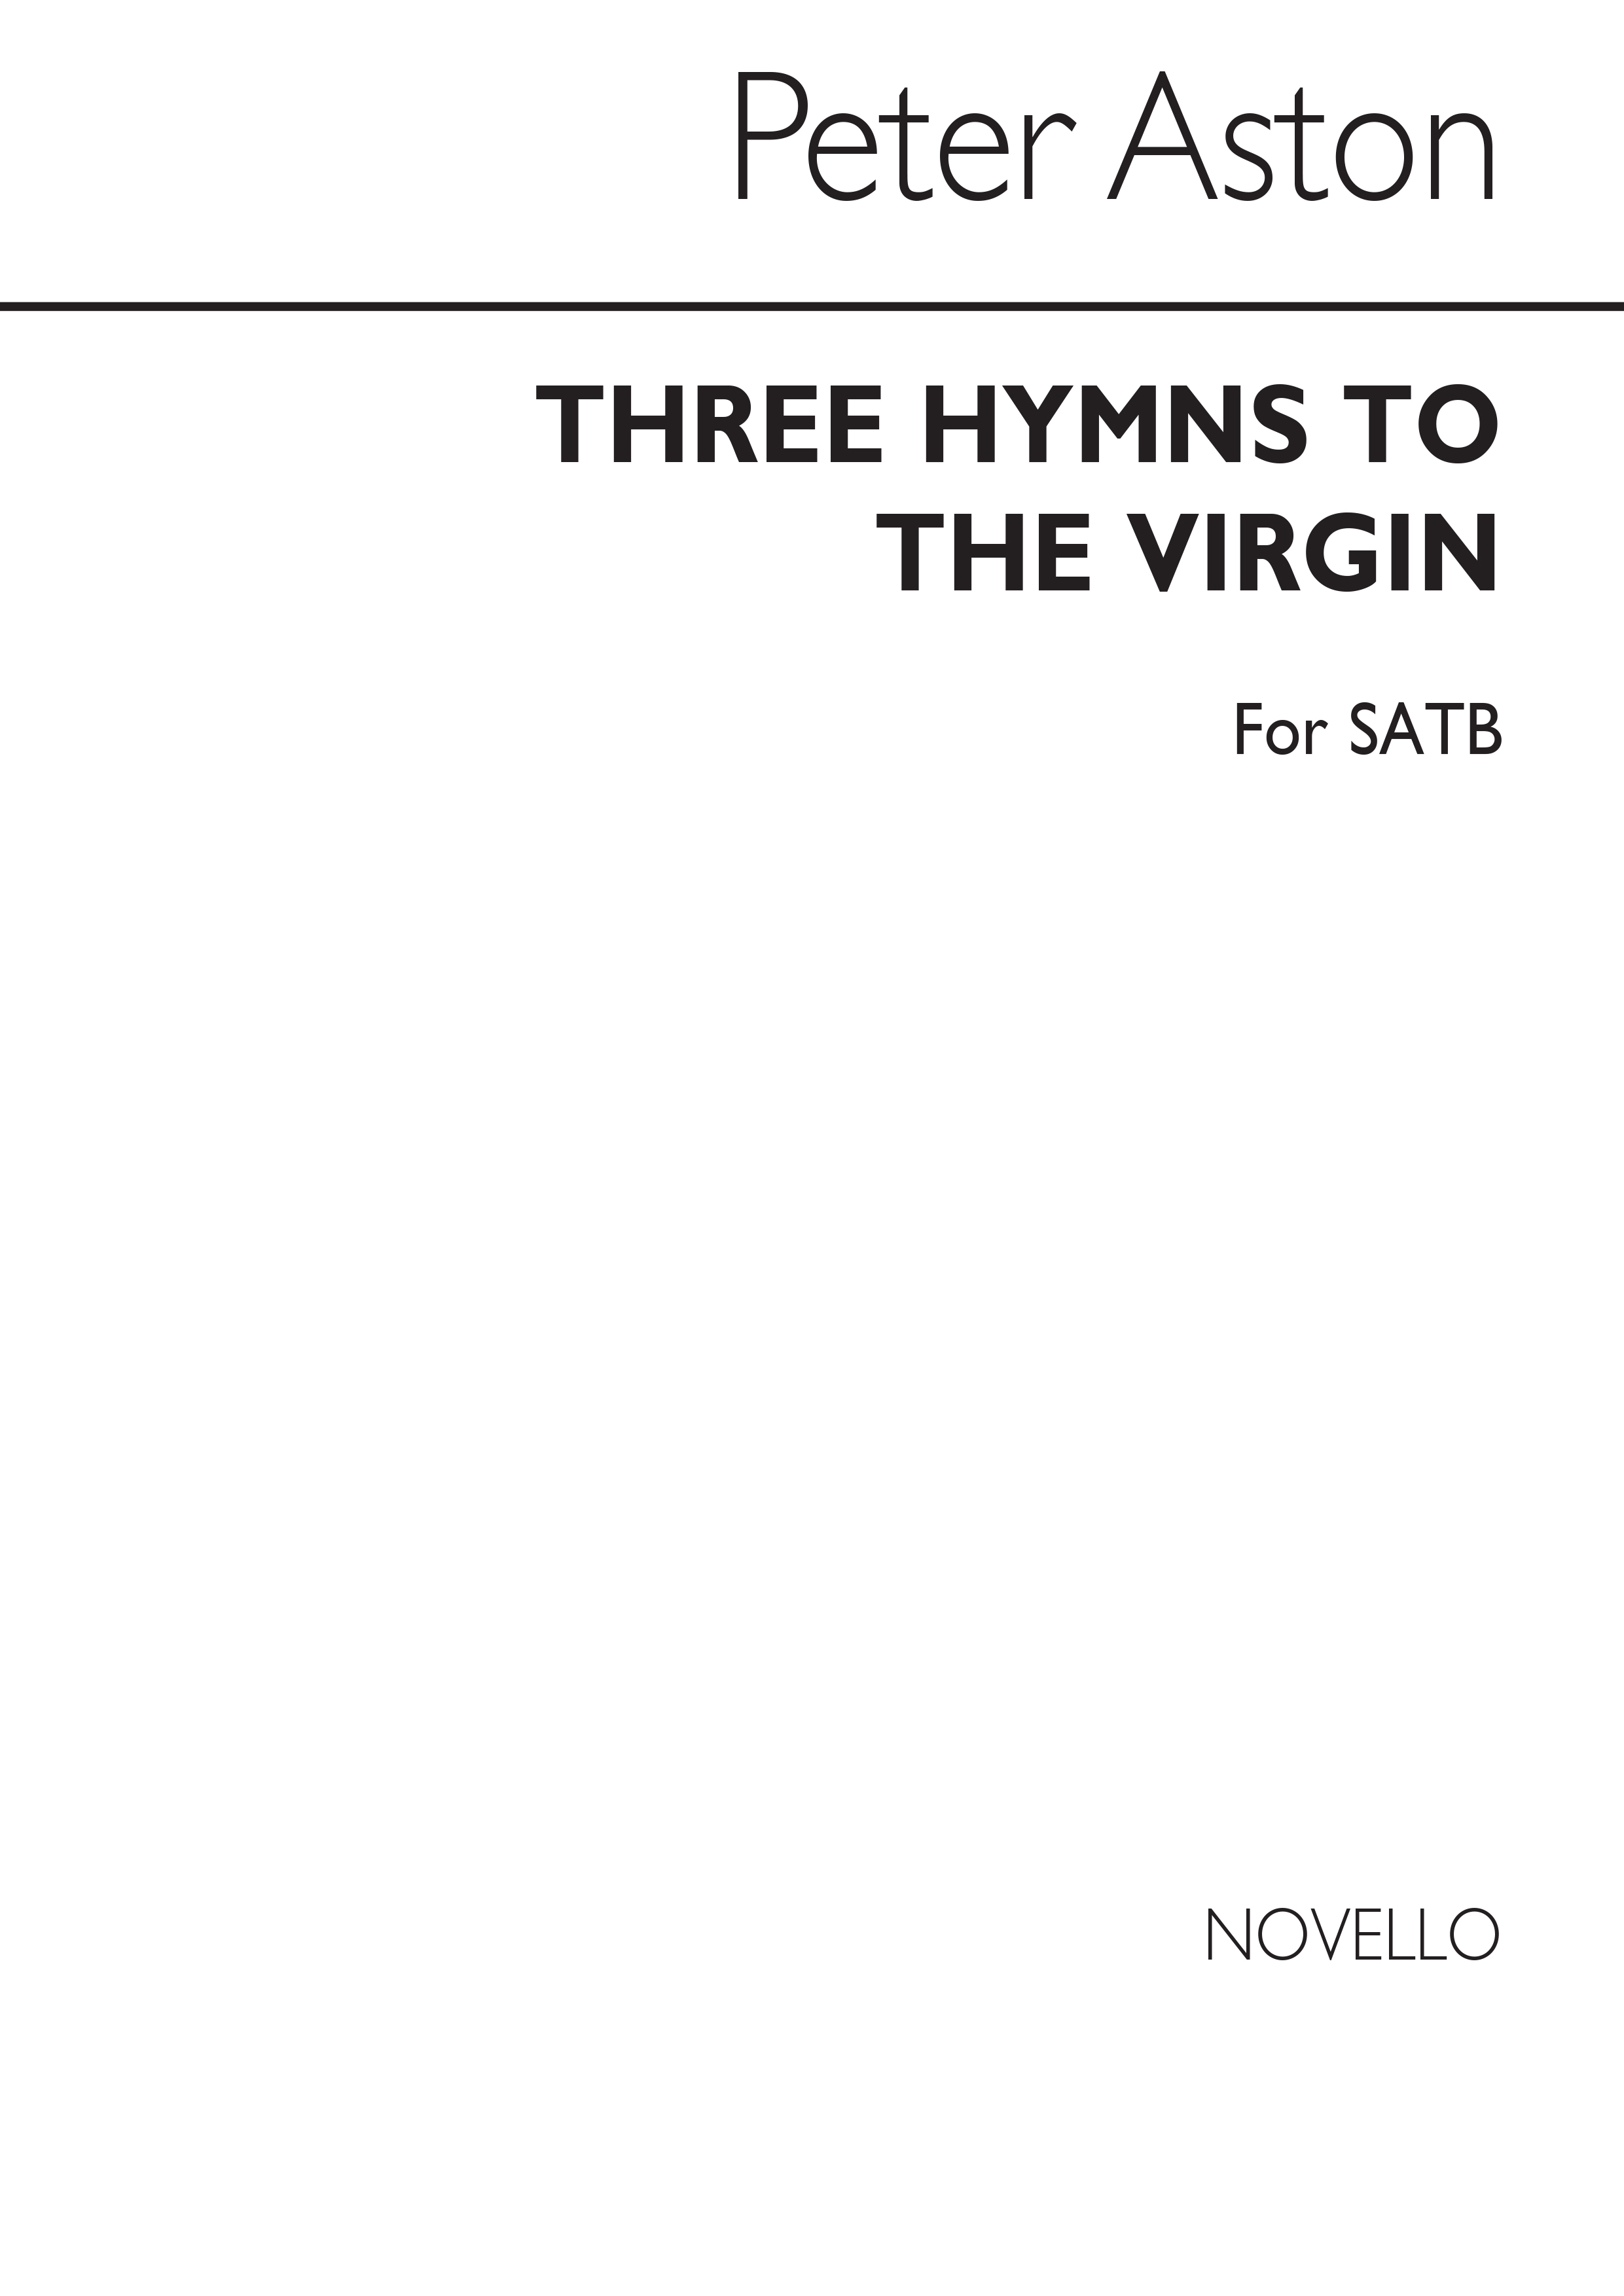 Peter Aston: Three Hymns To The Virgin for SATB Chorus